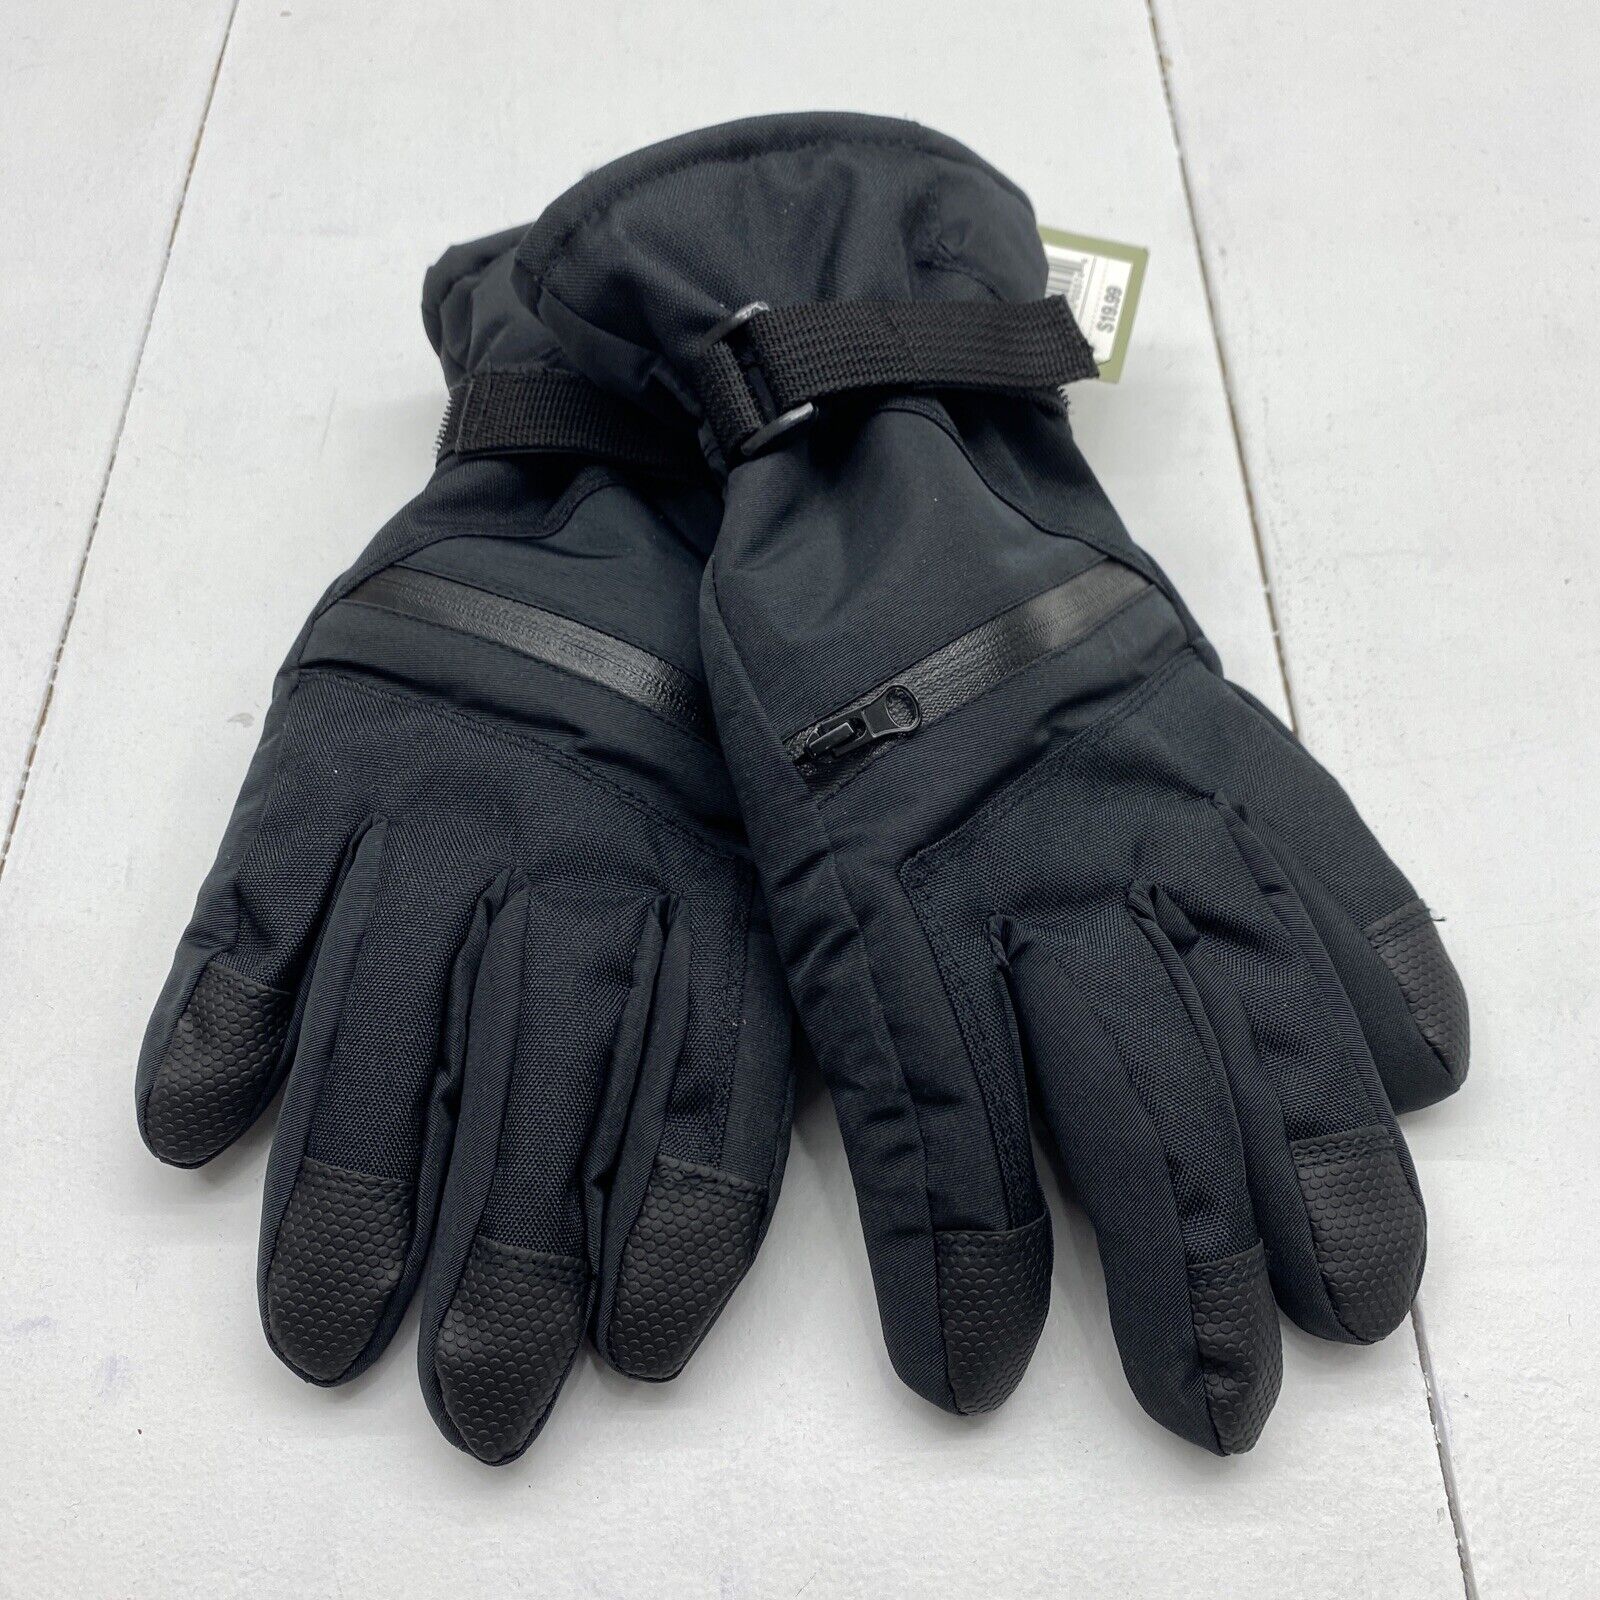 NEW Goodfellow & Co Ski Gloves Black Men's Size Large